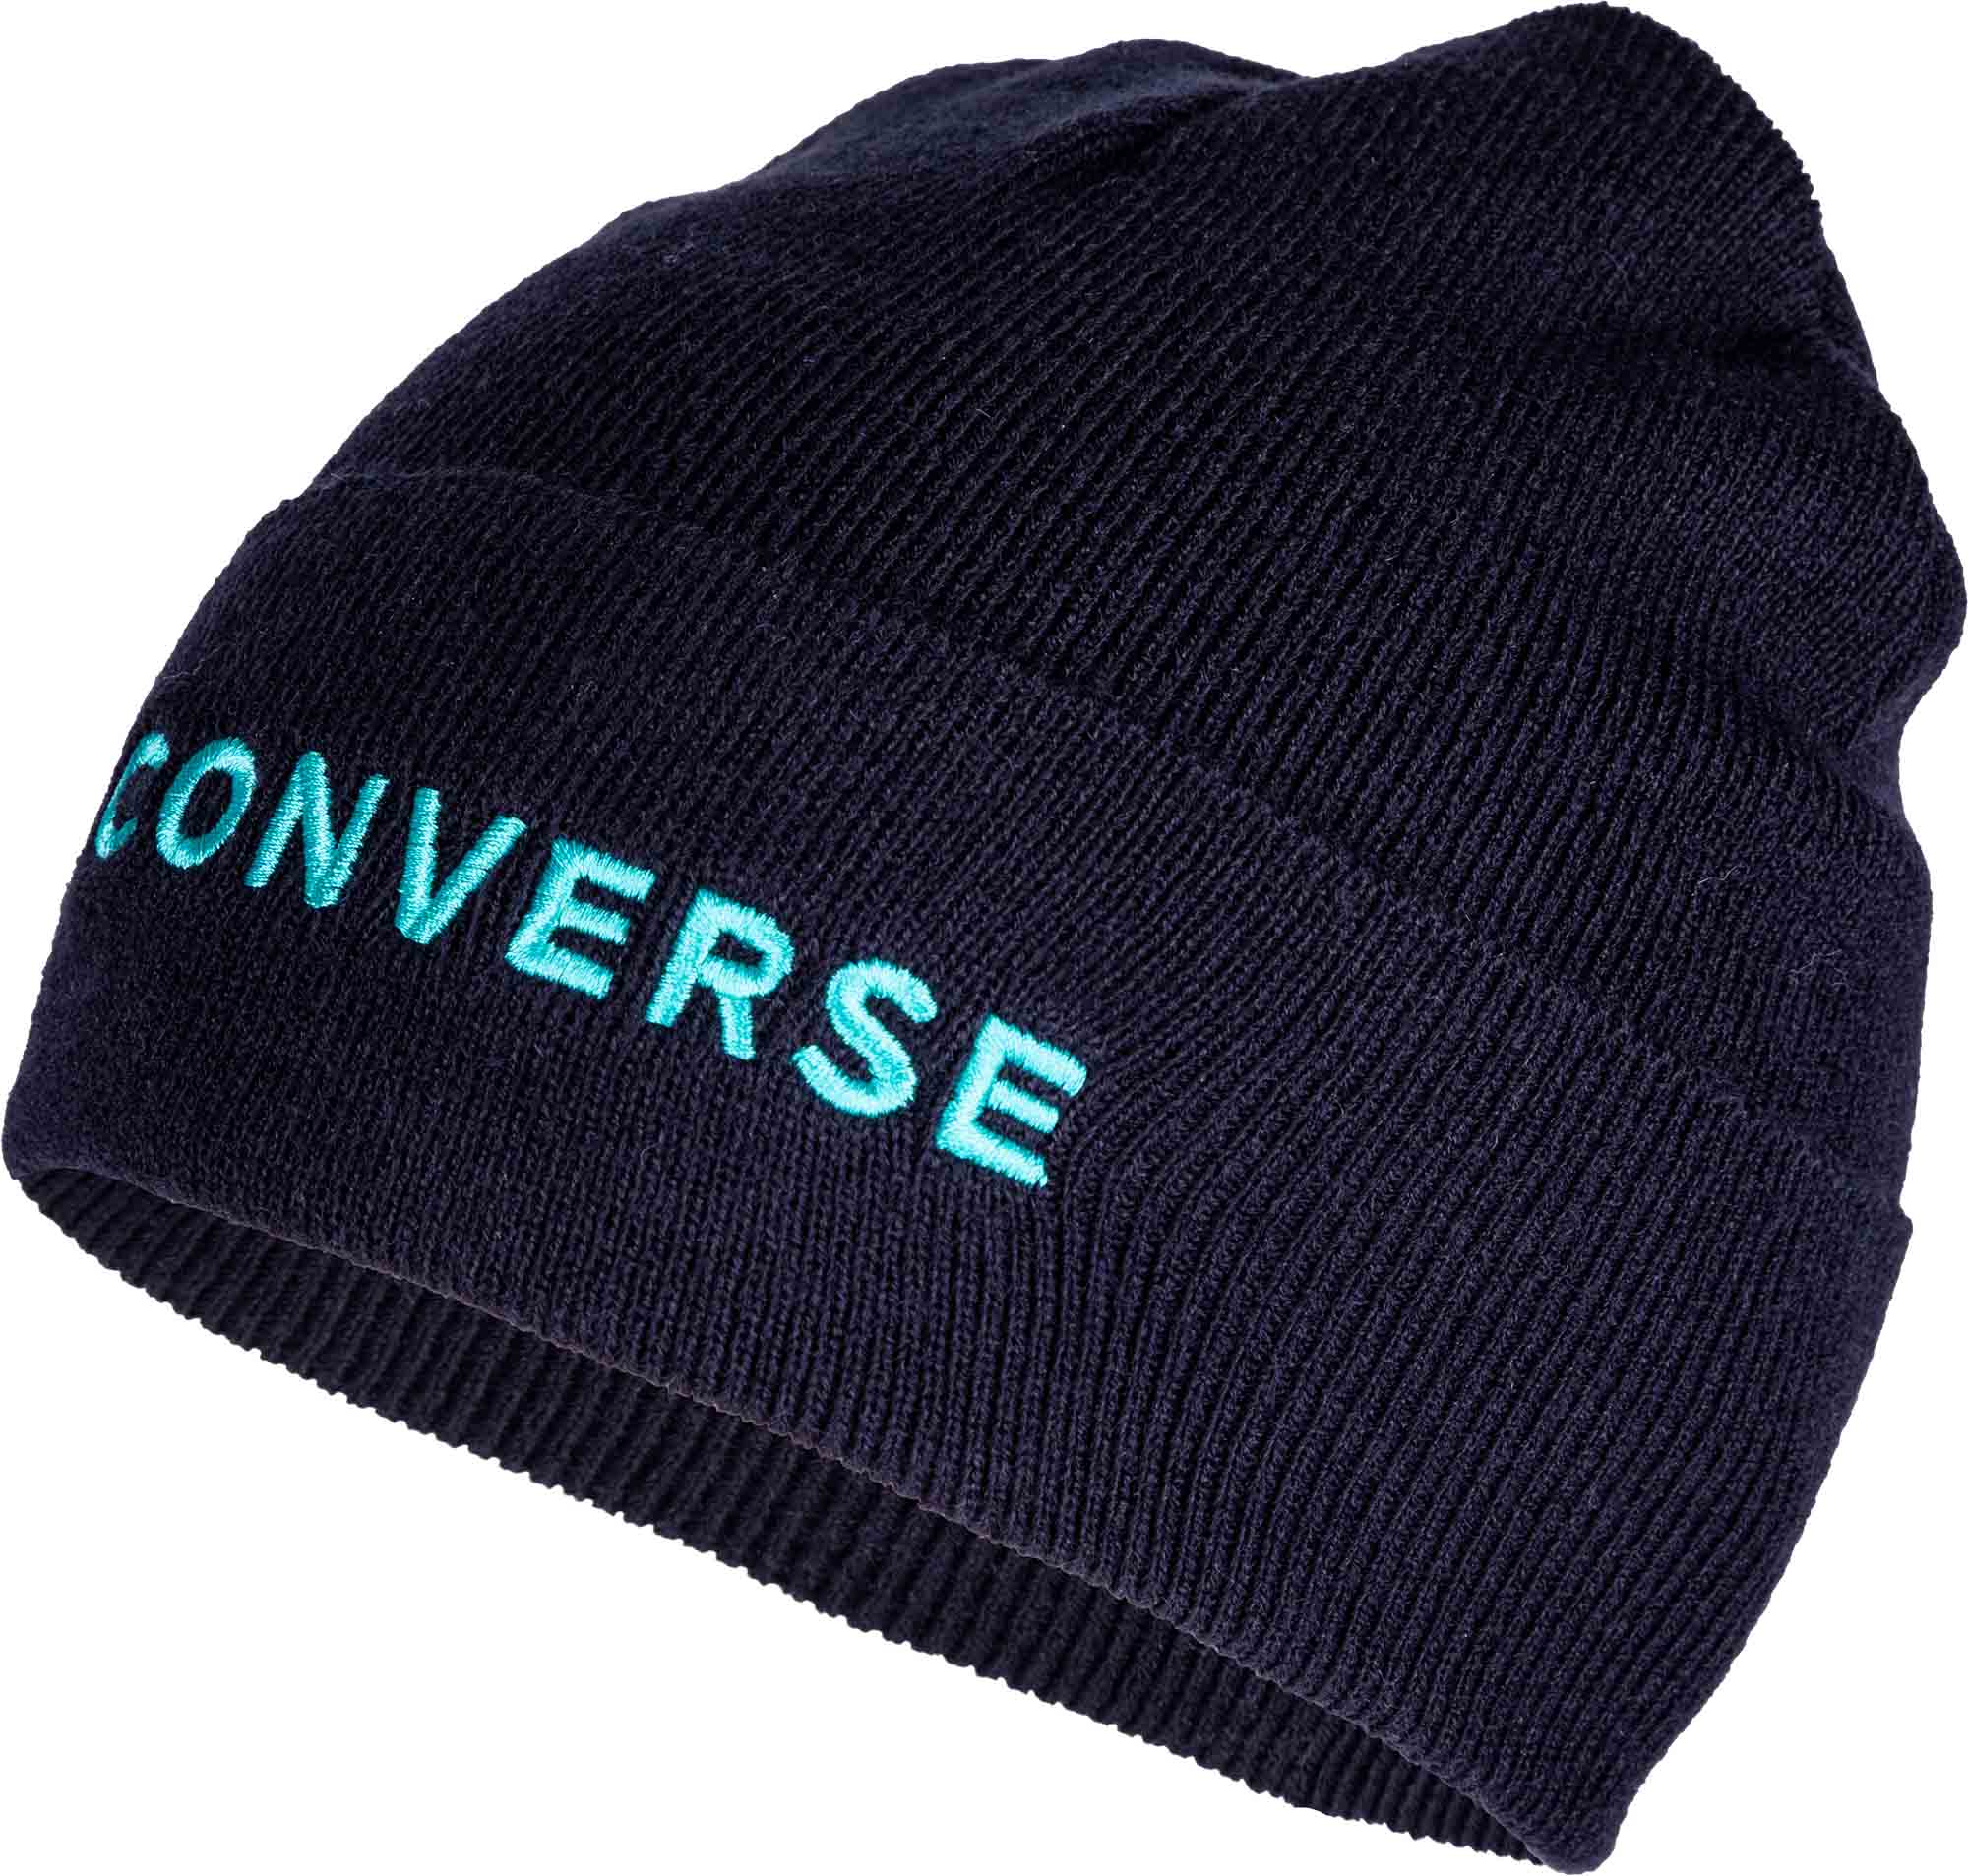 converse winter hat